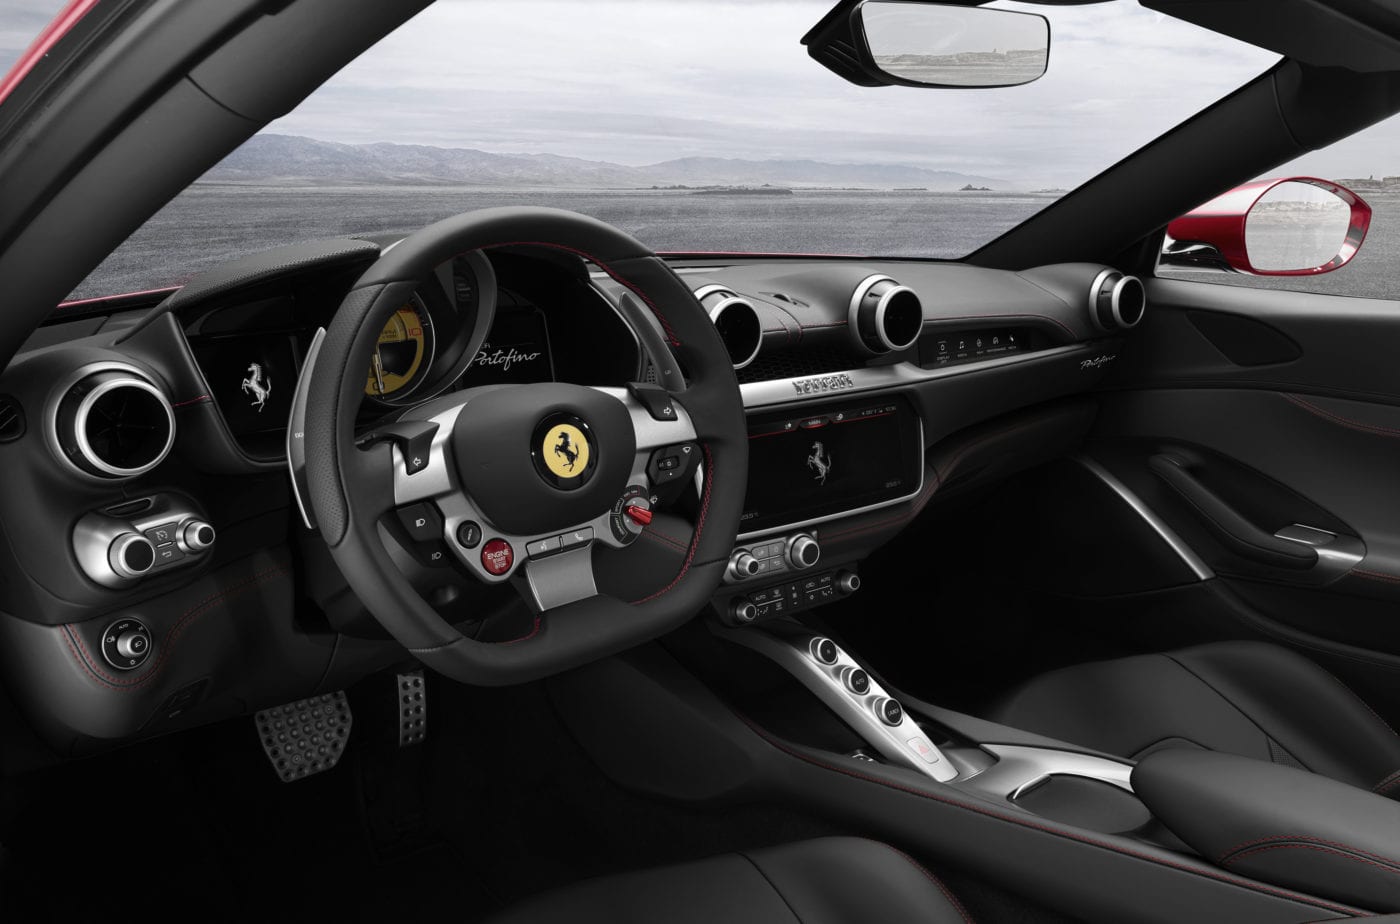 It doesn't get any better than the Ferrari Portofino interior.